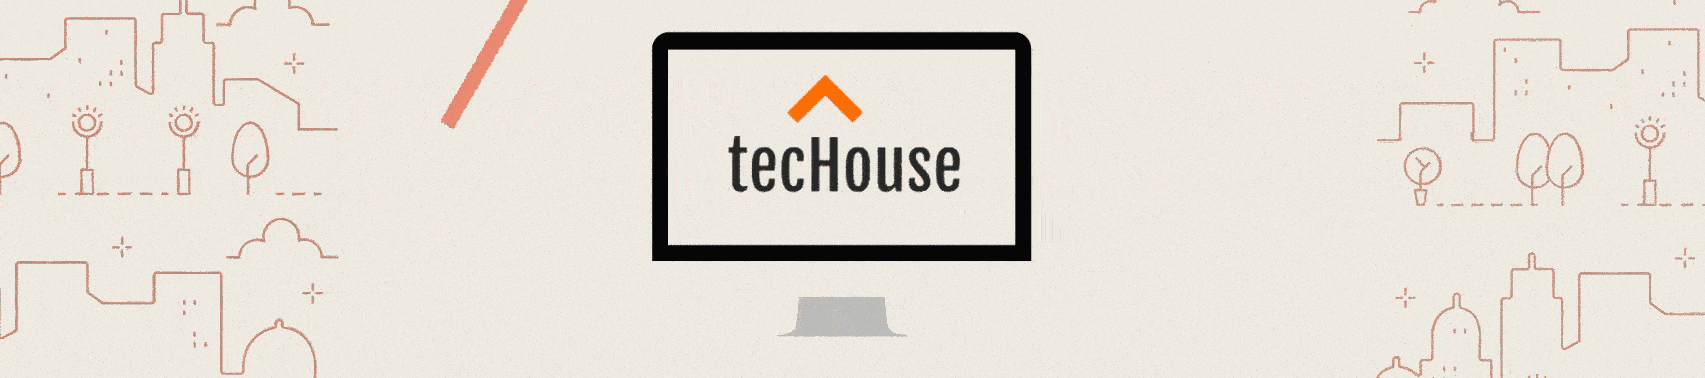 Techouse | TechouseHub